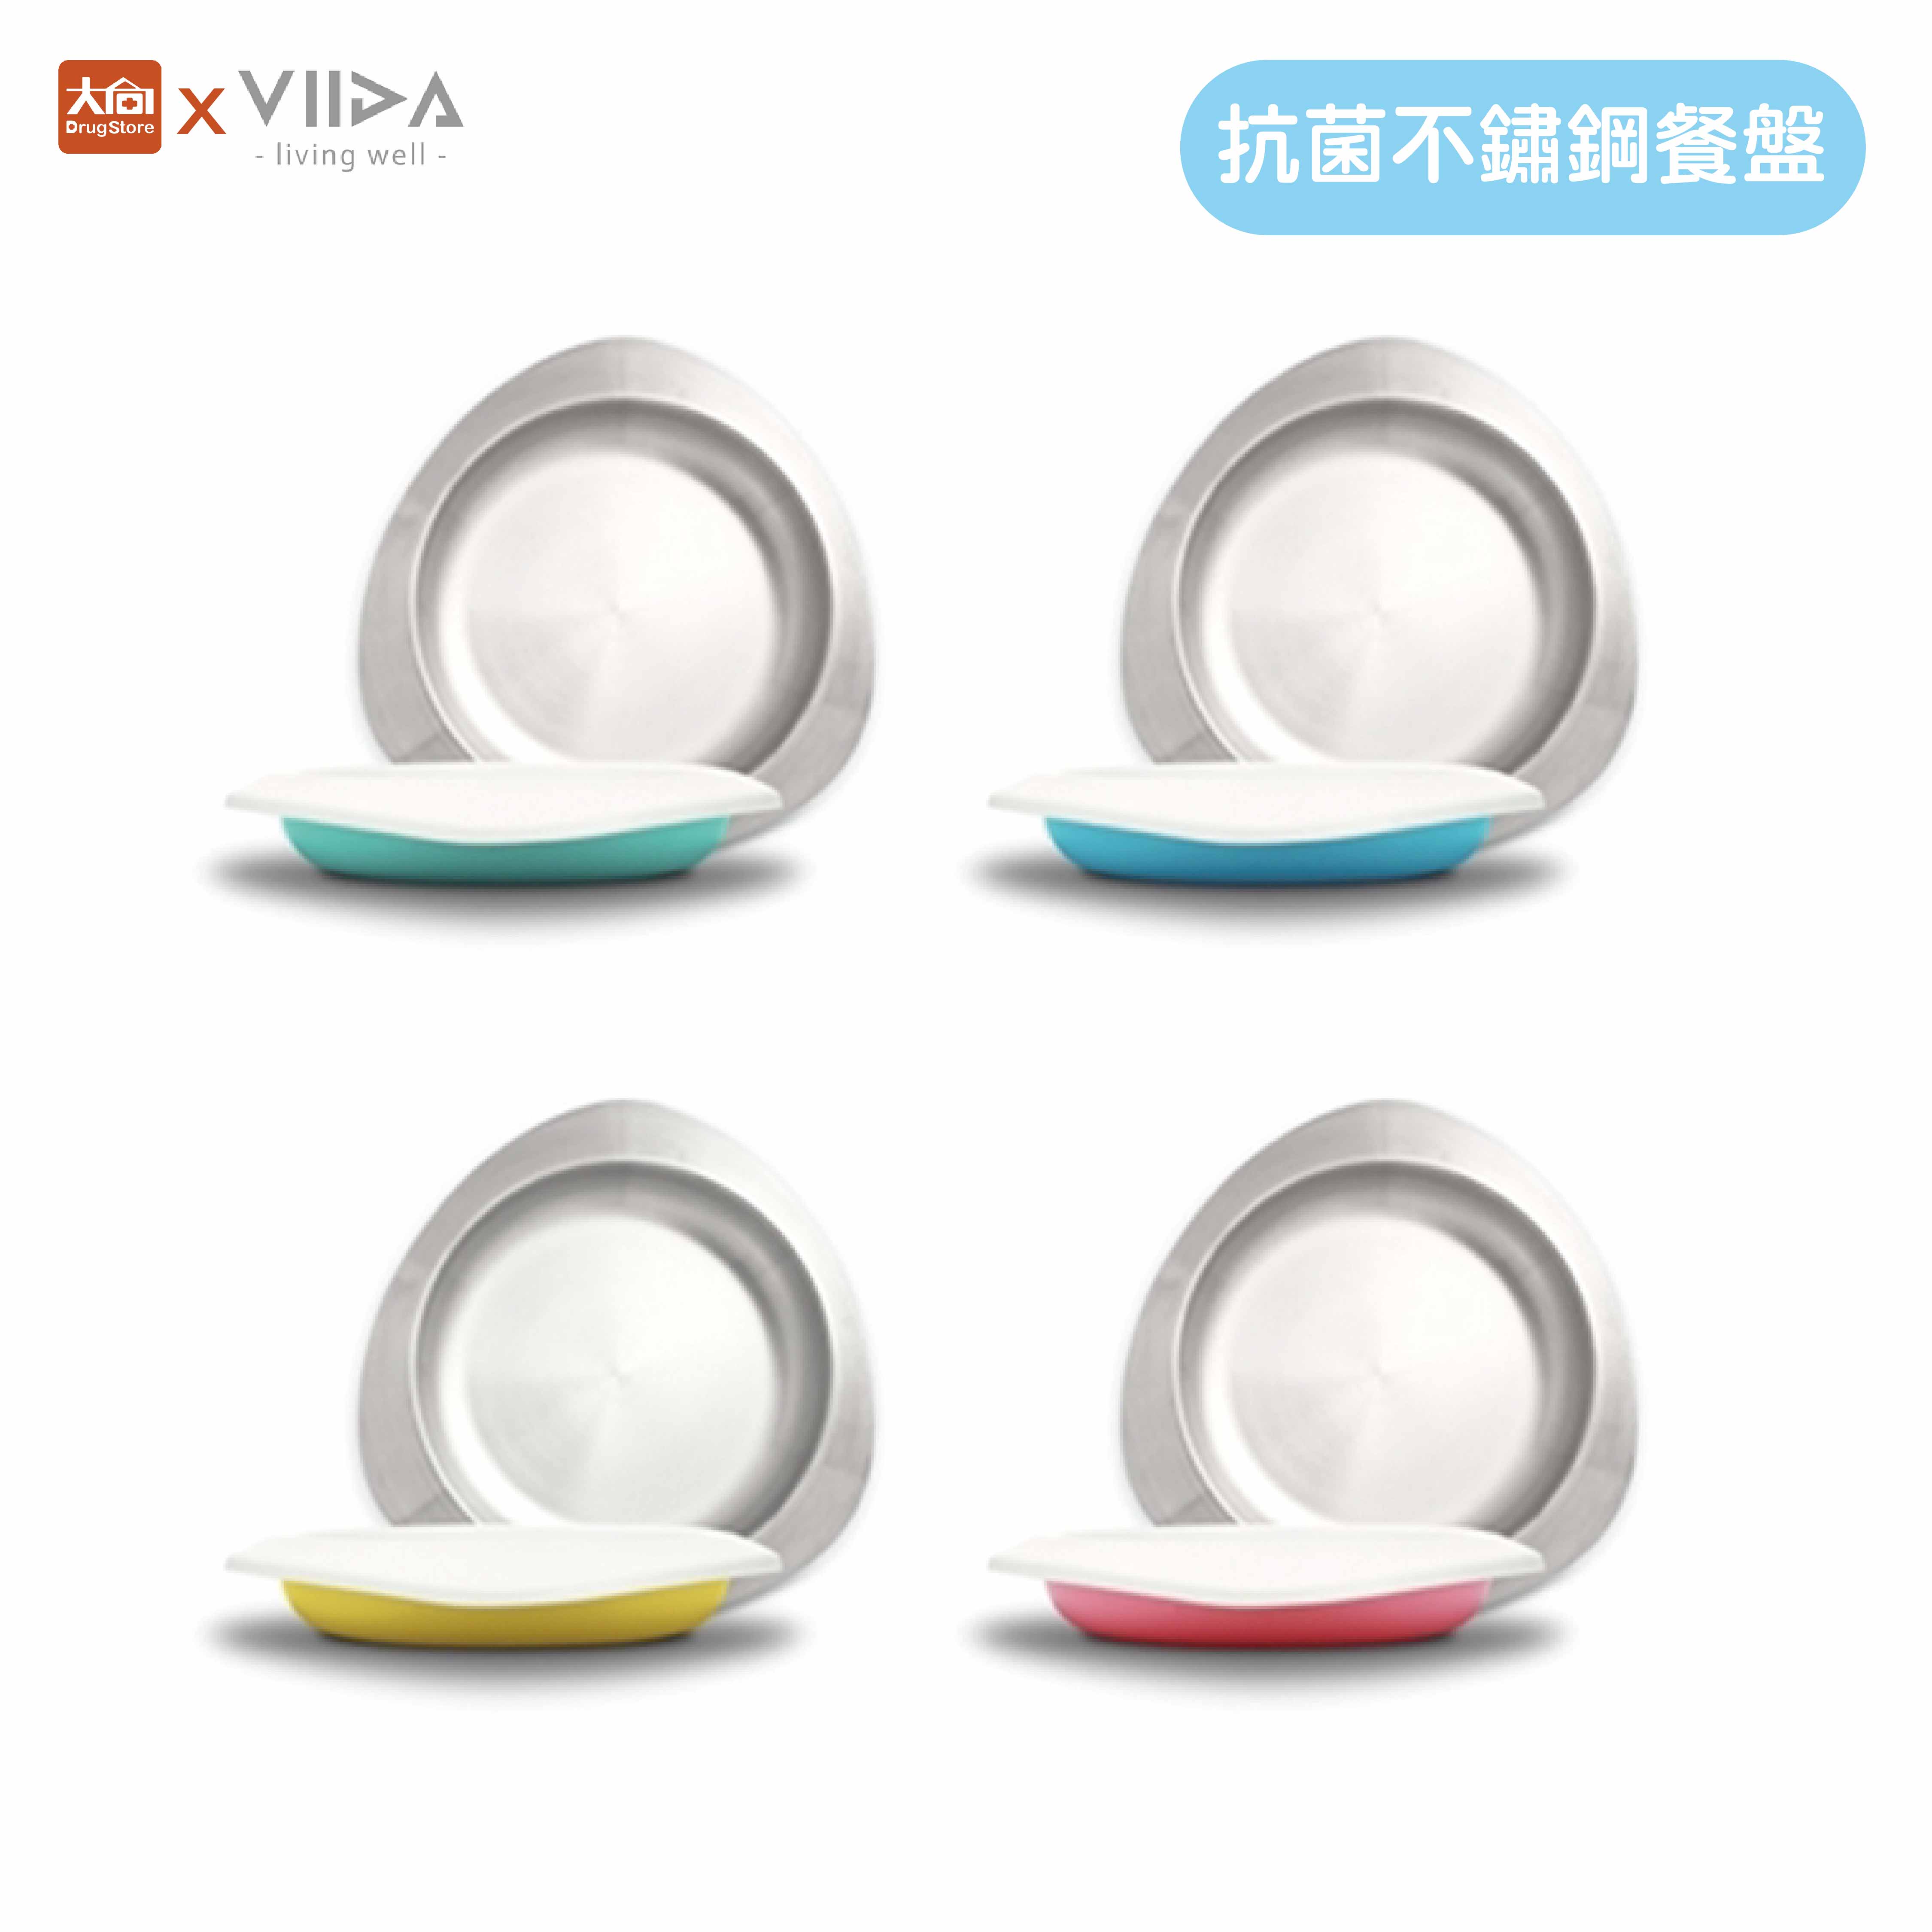 VIIDA SOUFFLÉ 抗菌不鏽鋼餐盤 多種顏色